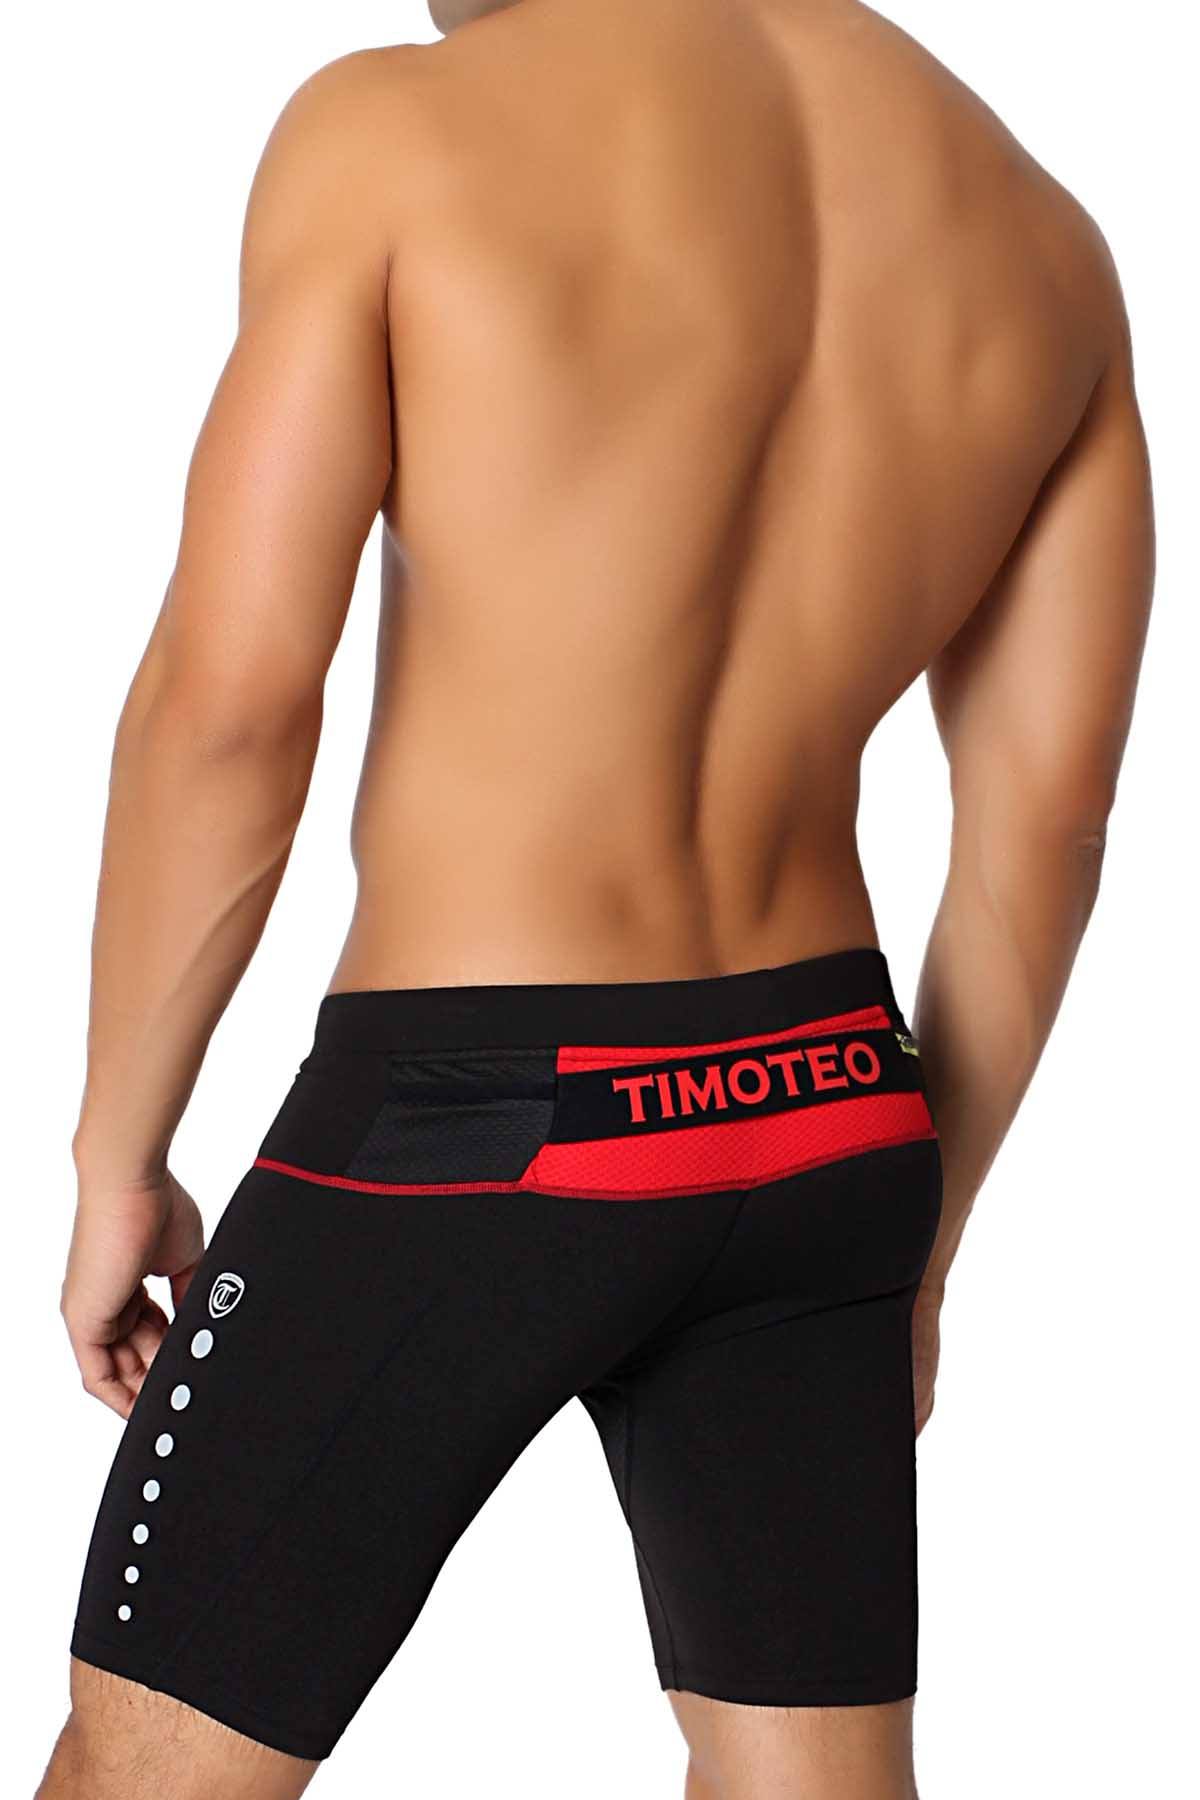 Timoteo Red Power Stretch Short